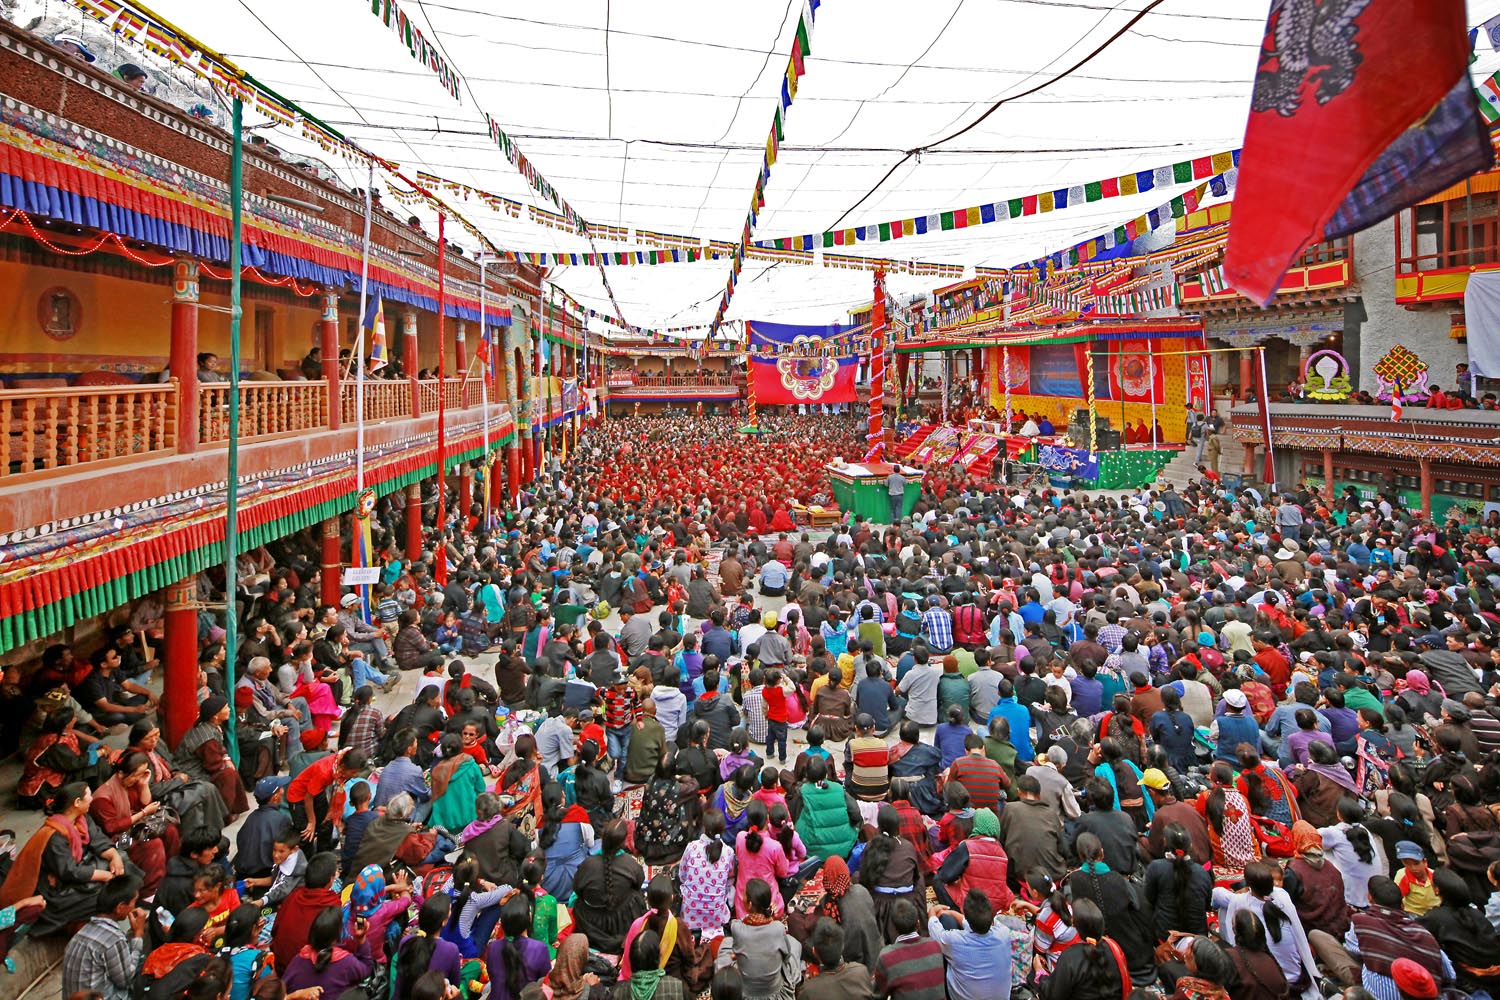 Packed audience, Hemis Monastery